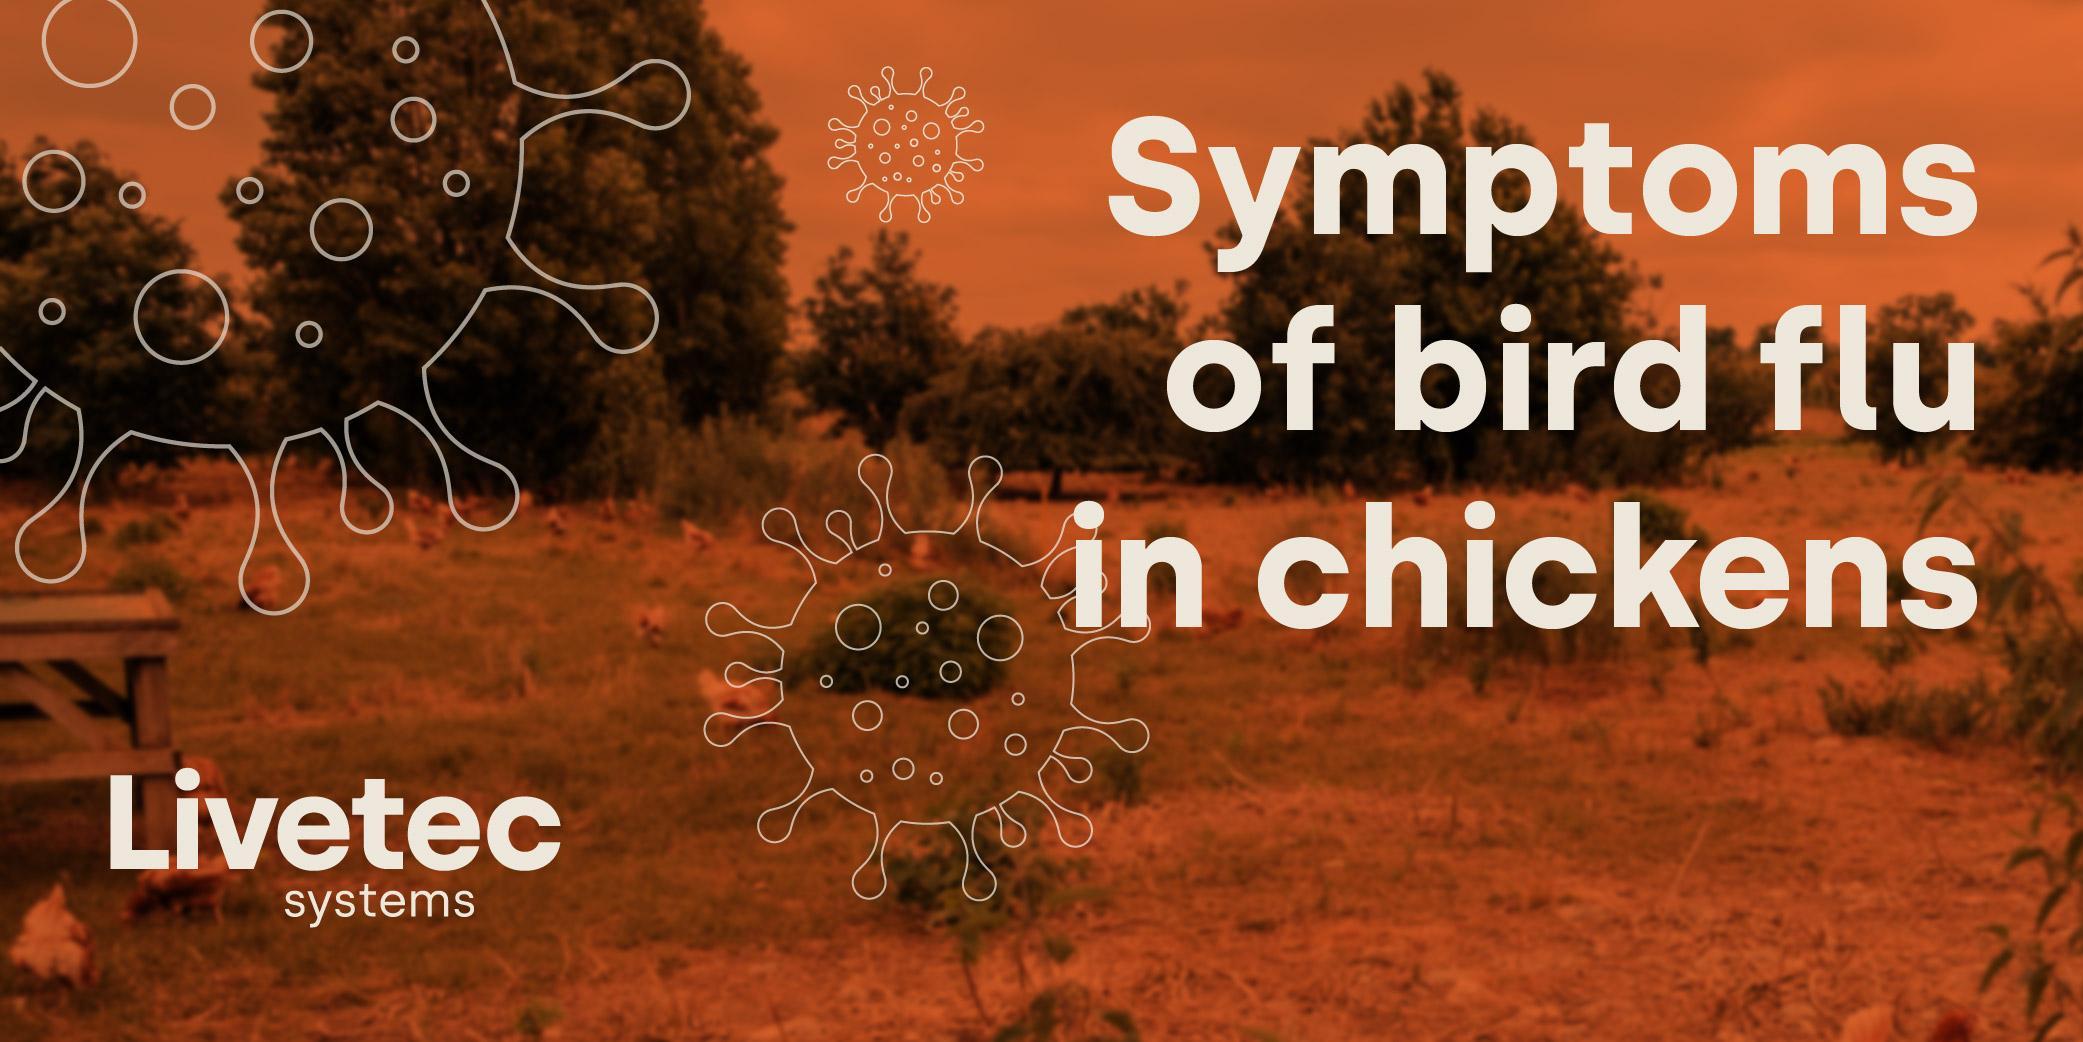 Symptoms of bird flu in chickens graphic